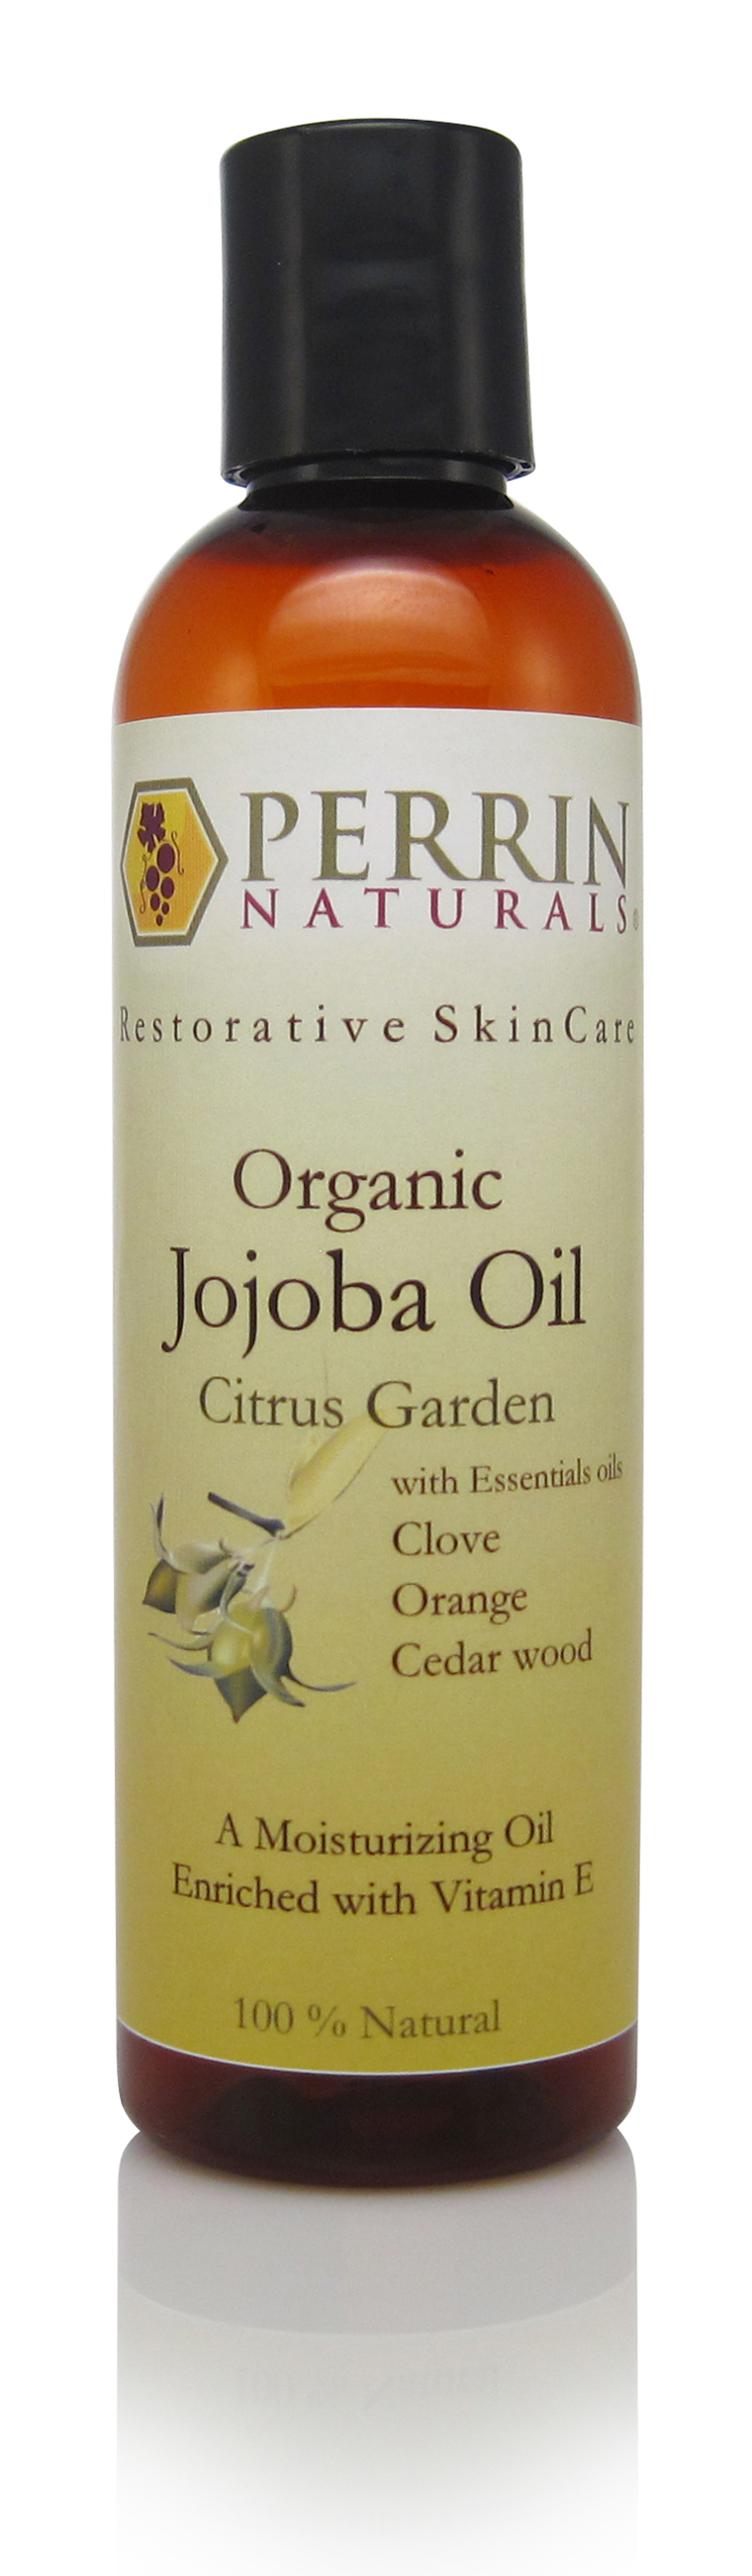 perrin naturals citrus garden jojoba oil